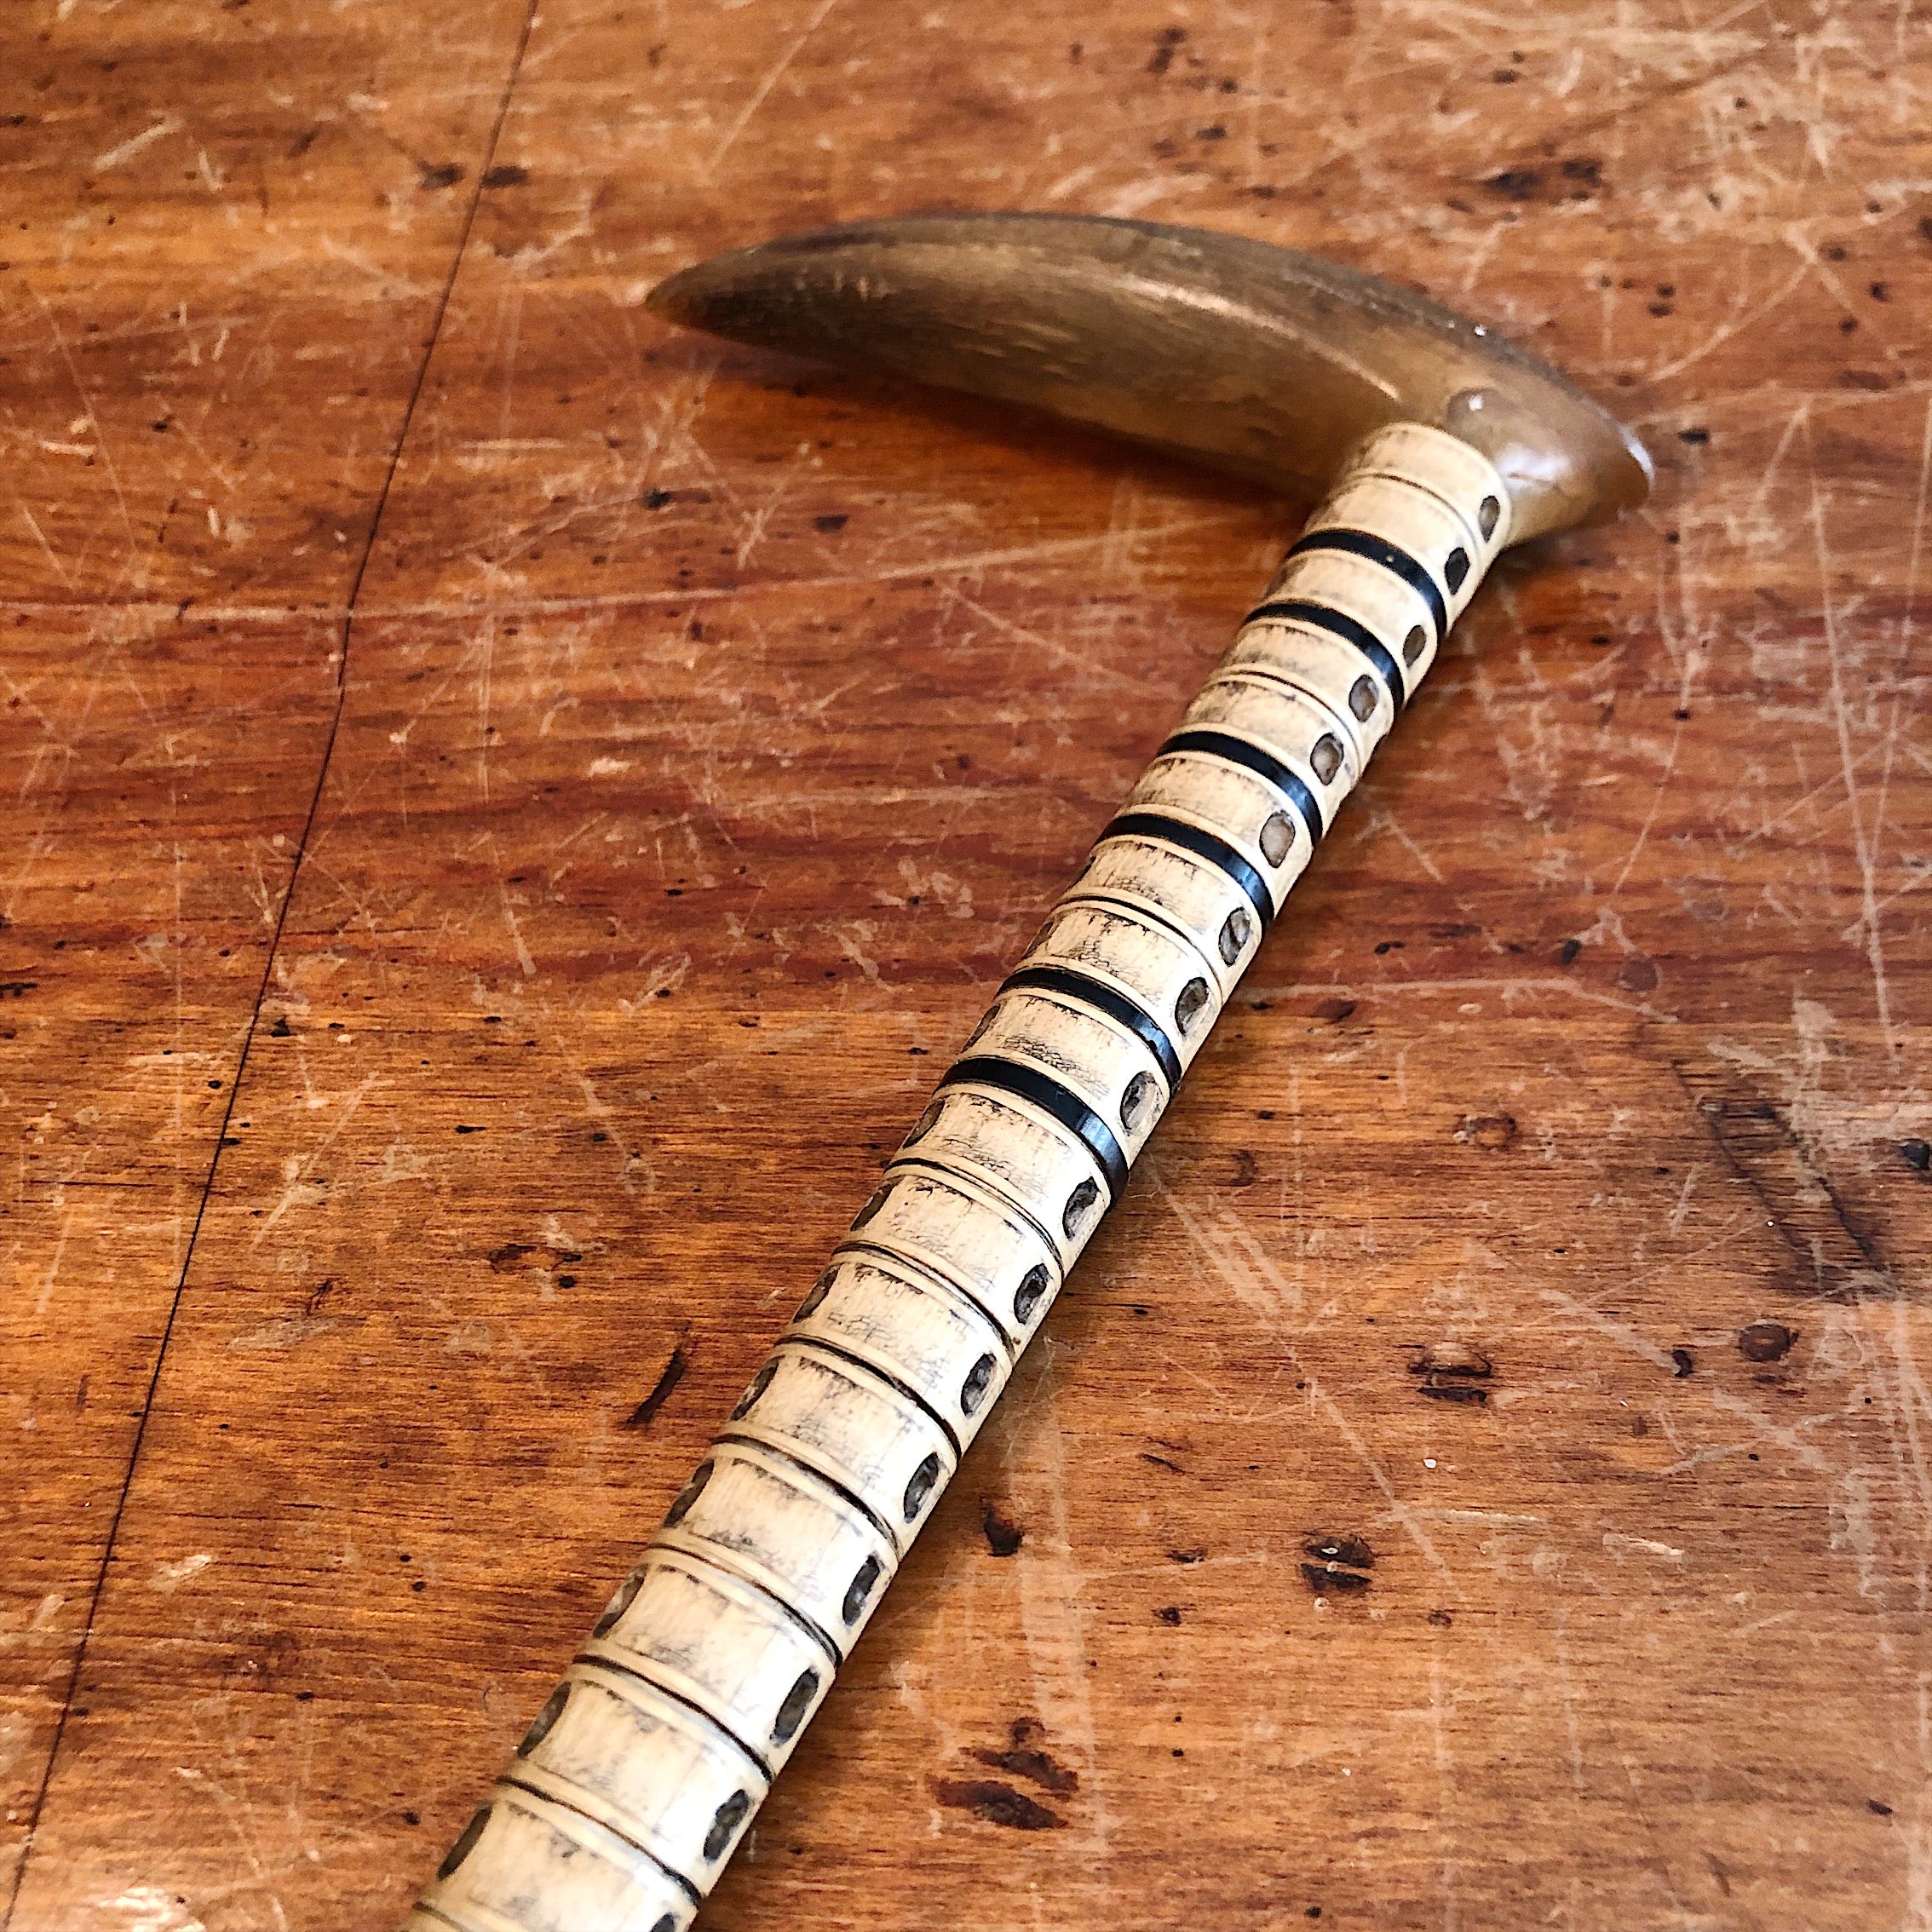 Antique Shark Vertebrae Cane with Horn Handle - 19th Century Shark Spine Walking Stick 